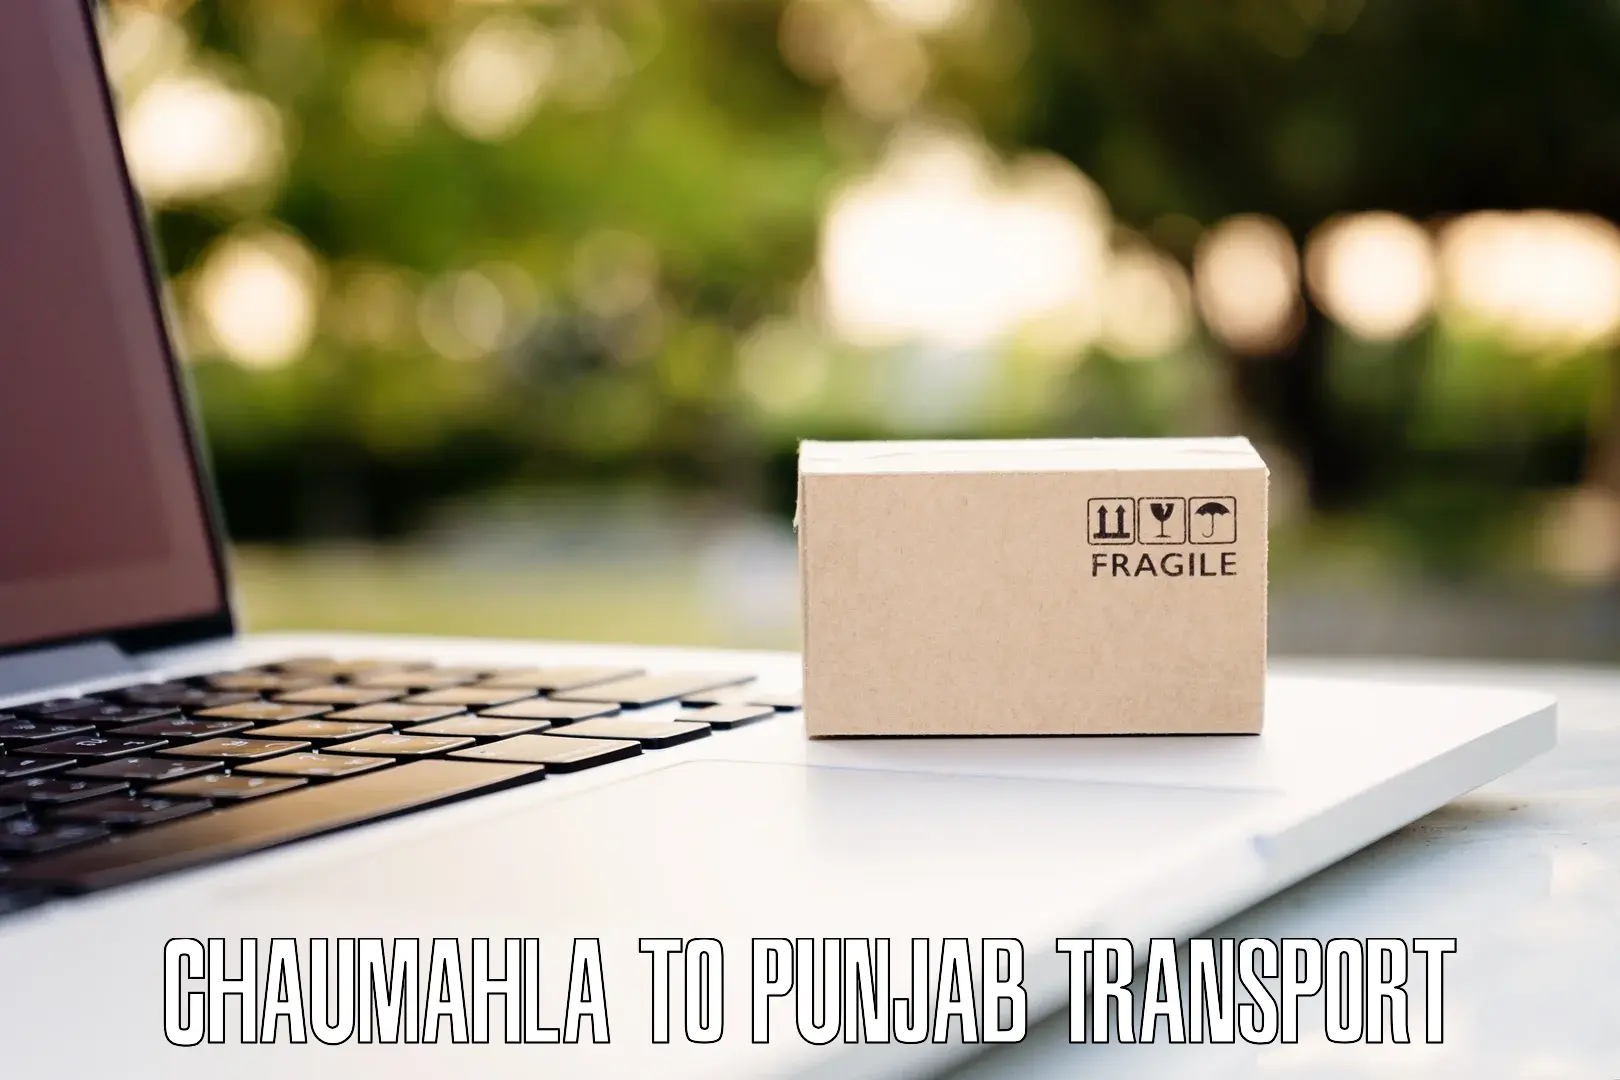 Delivery service Chaumahla to Phagwara